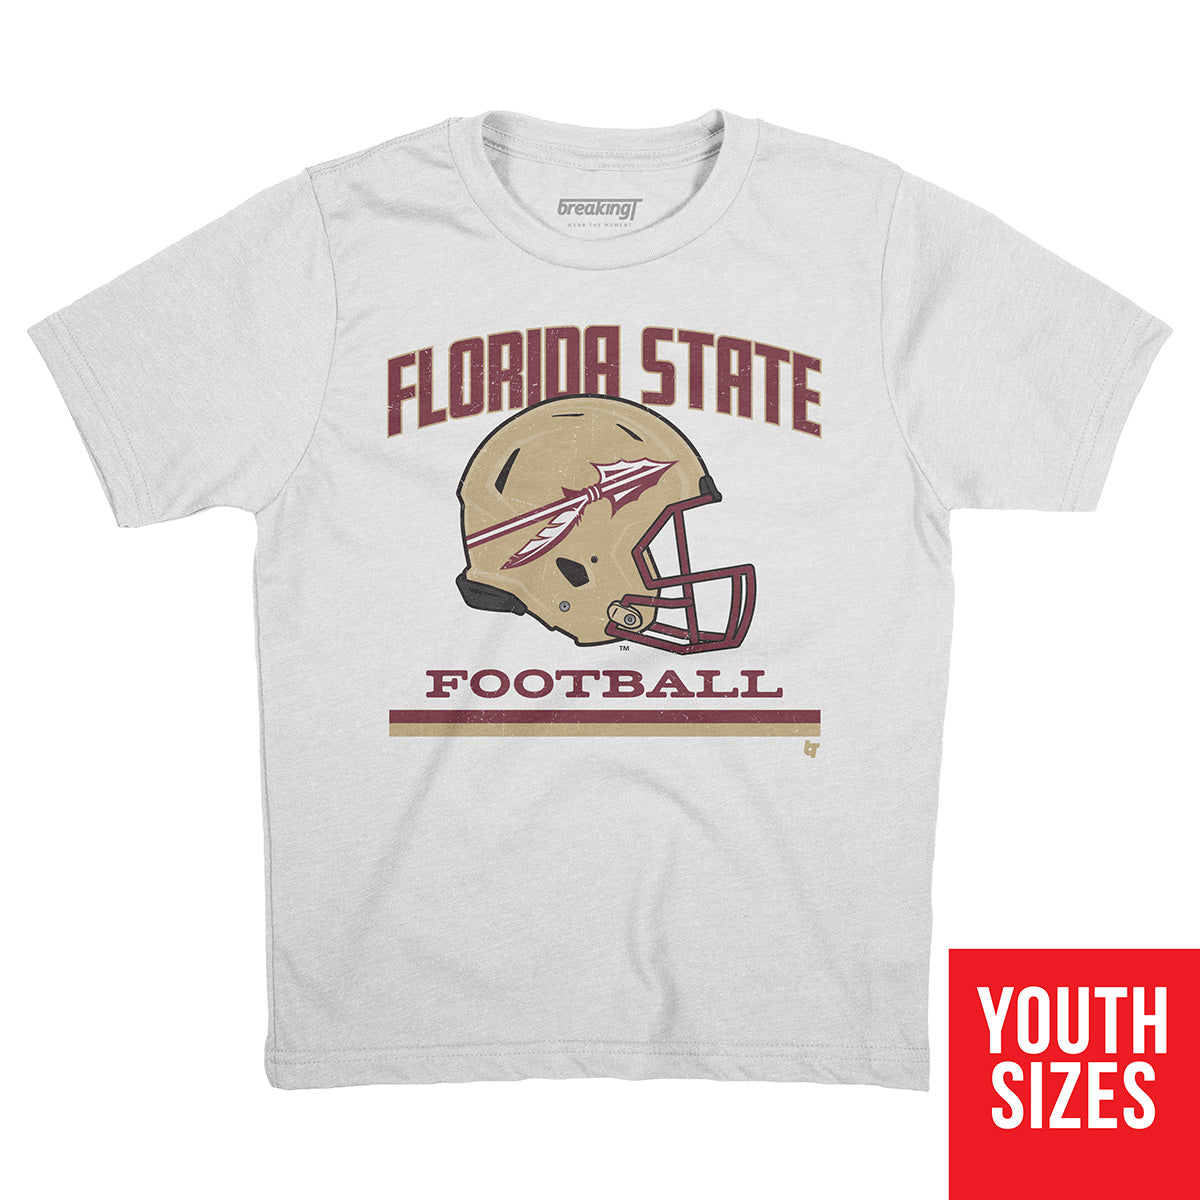 FSU Gifts & Football Gear, Florida State Seminoles Apparel, Seminoles Shop